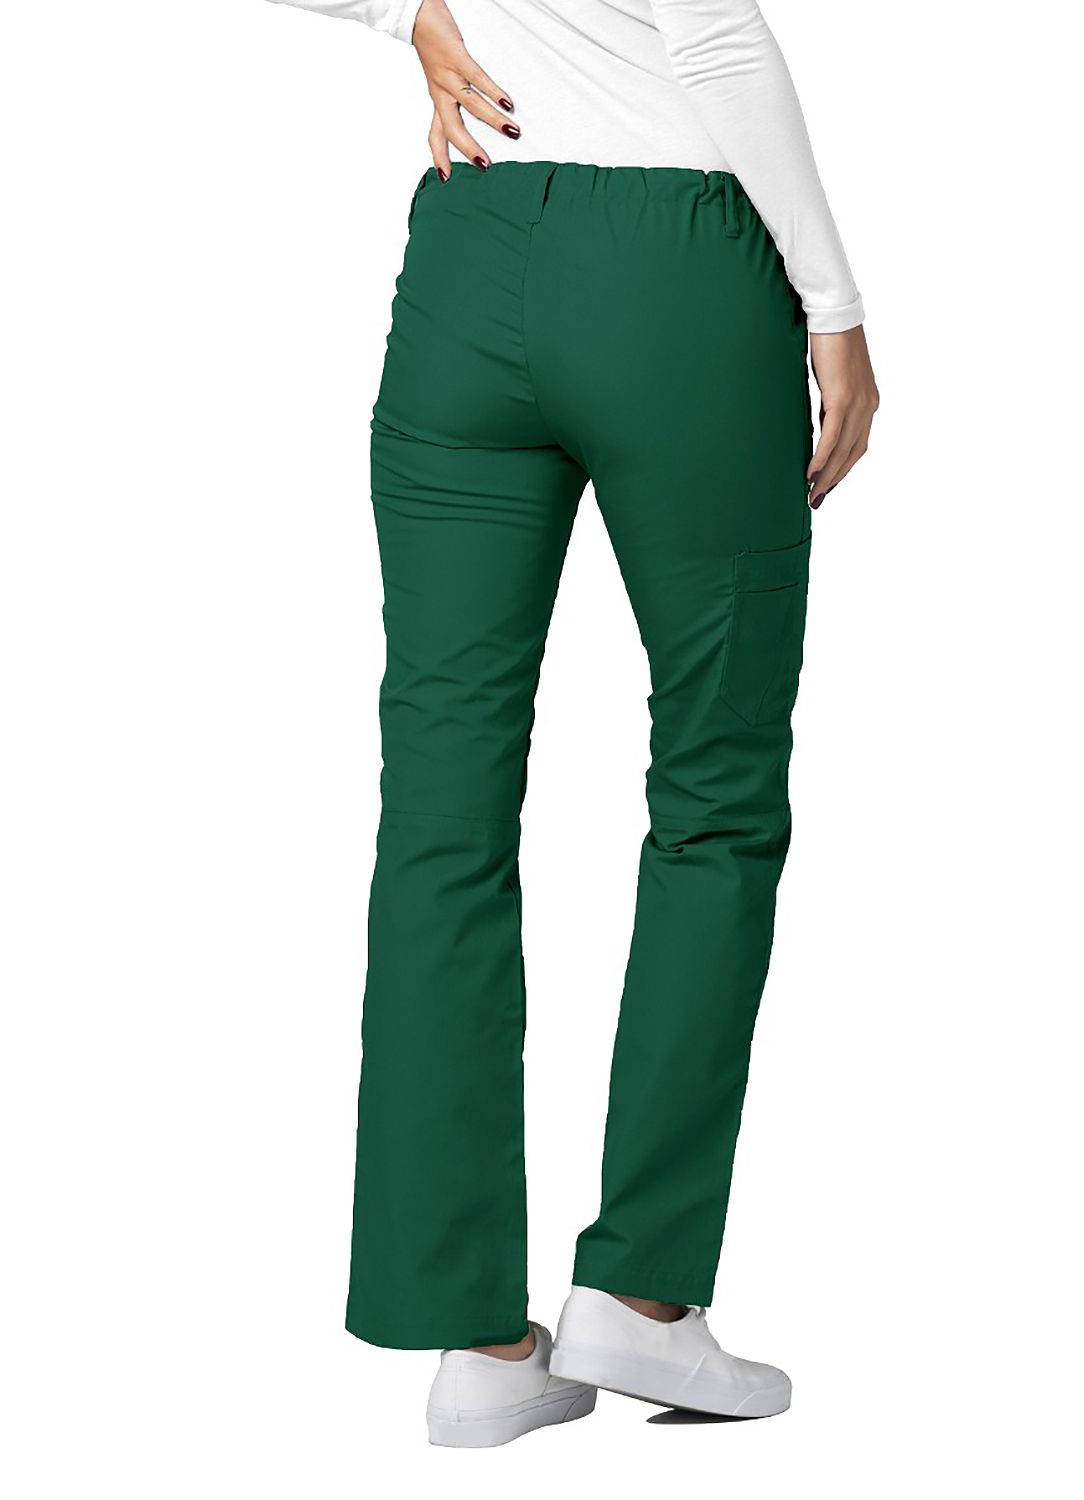 Low-Rise Drawstring Pants by AdarXS-3XL  / Hunter Green